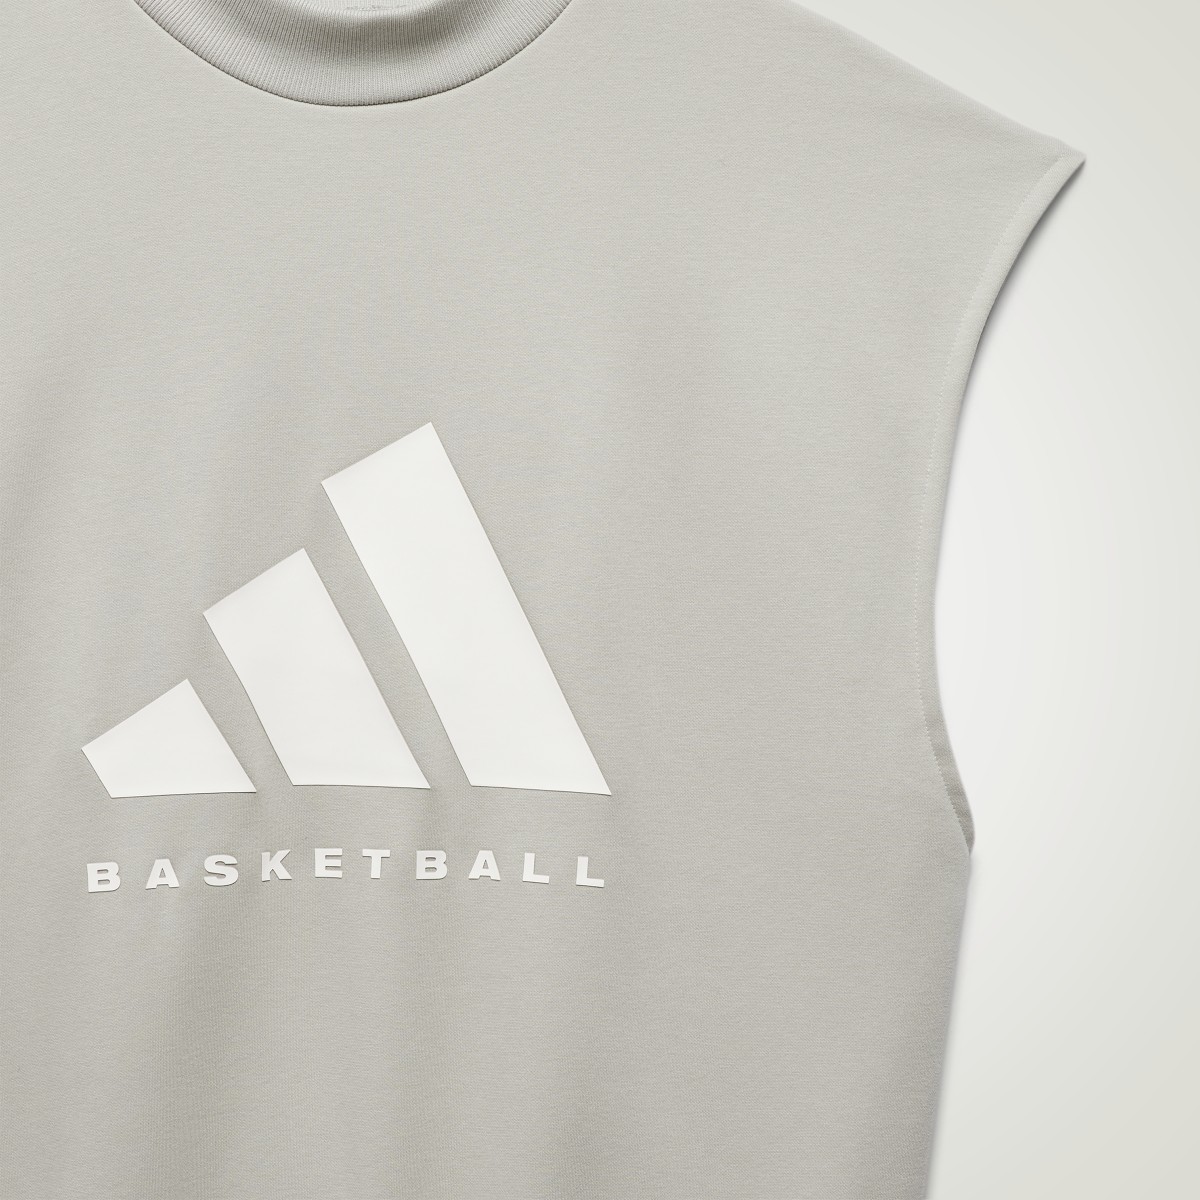 Adidas Basketball Sleeveless Sweatshirt. 7